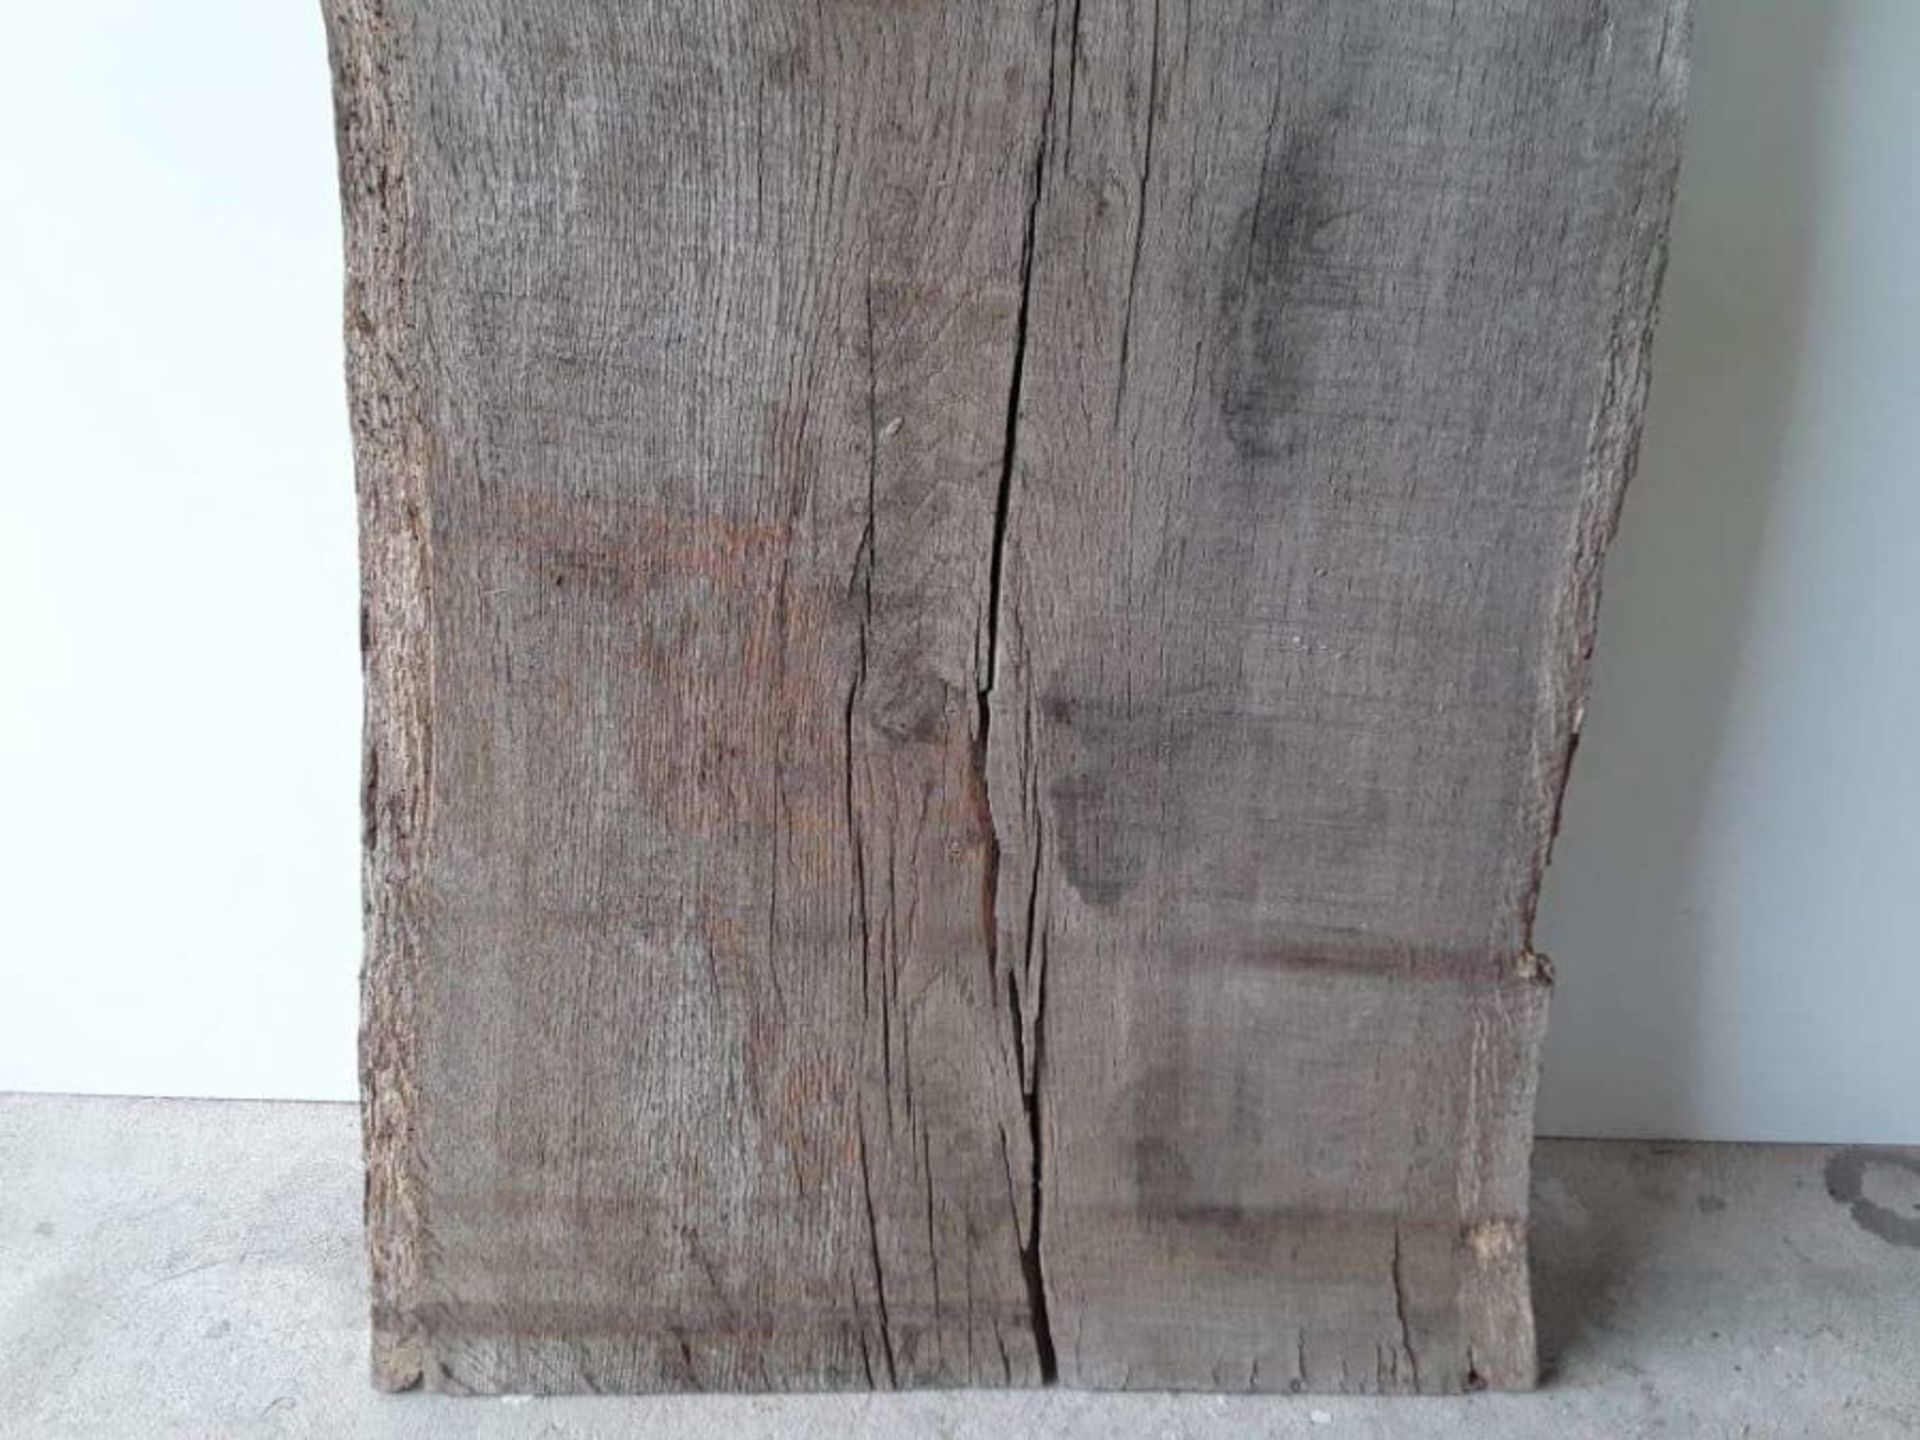 1 x Hardwood Air Dried Sawn Timber Waney Edge / Live Edge English Oak Board / Plank - Image 3 of 5